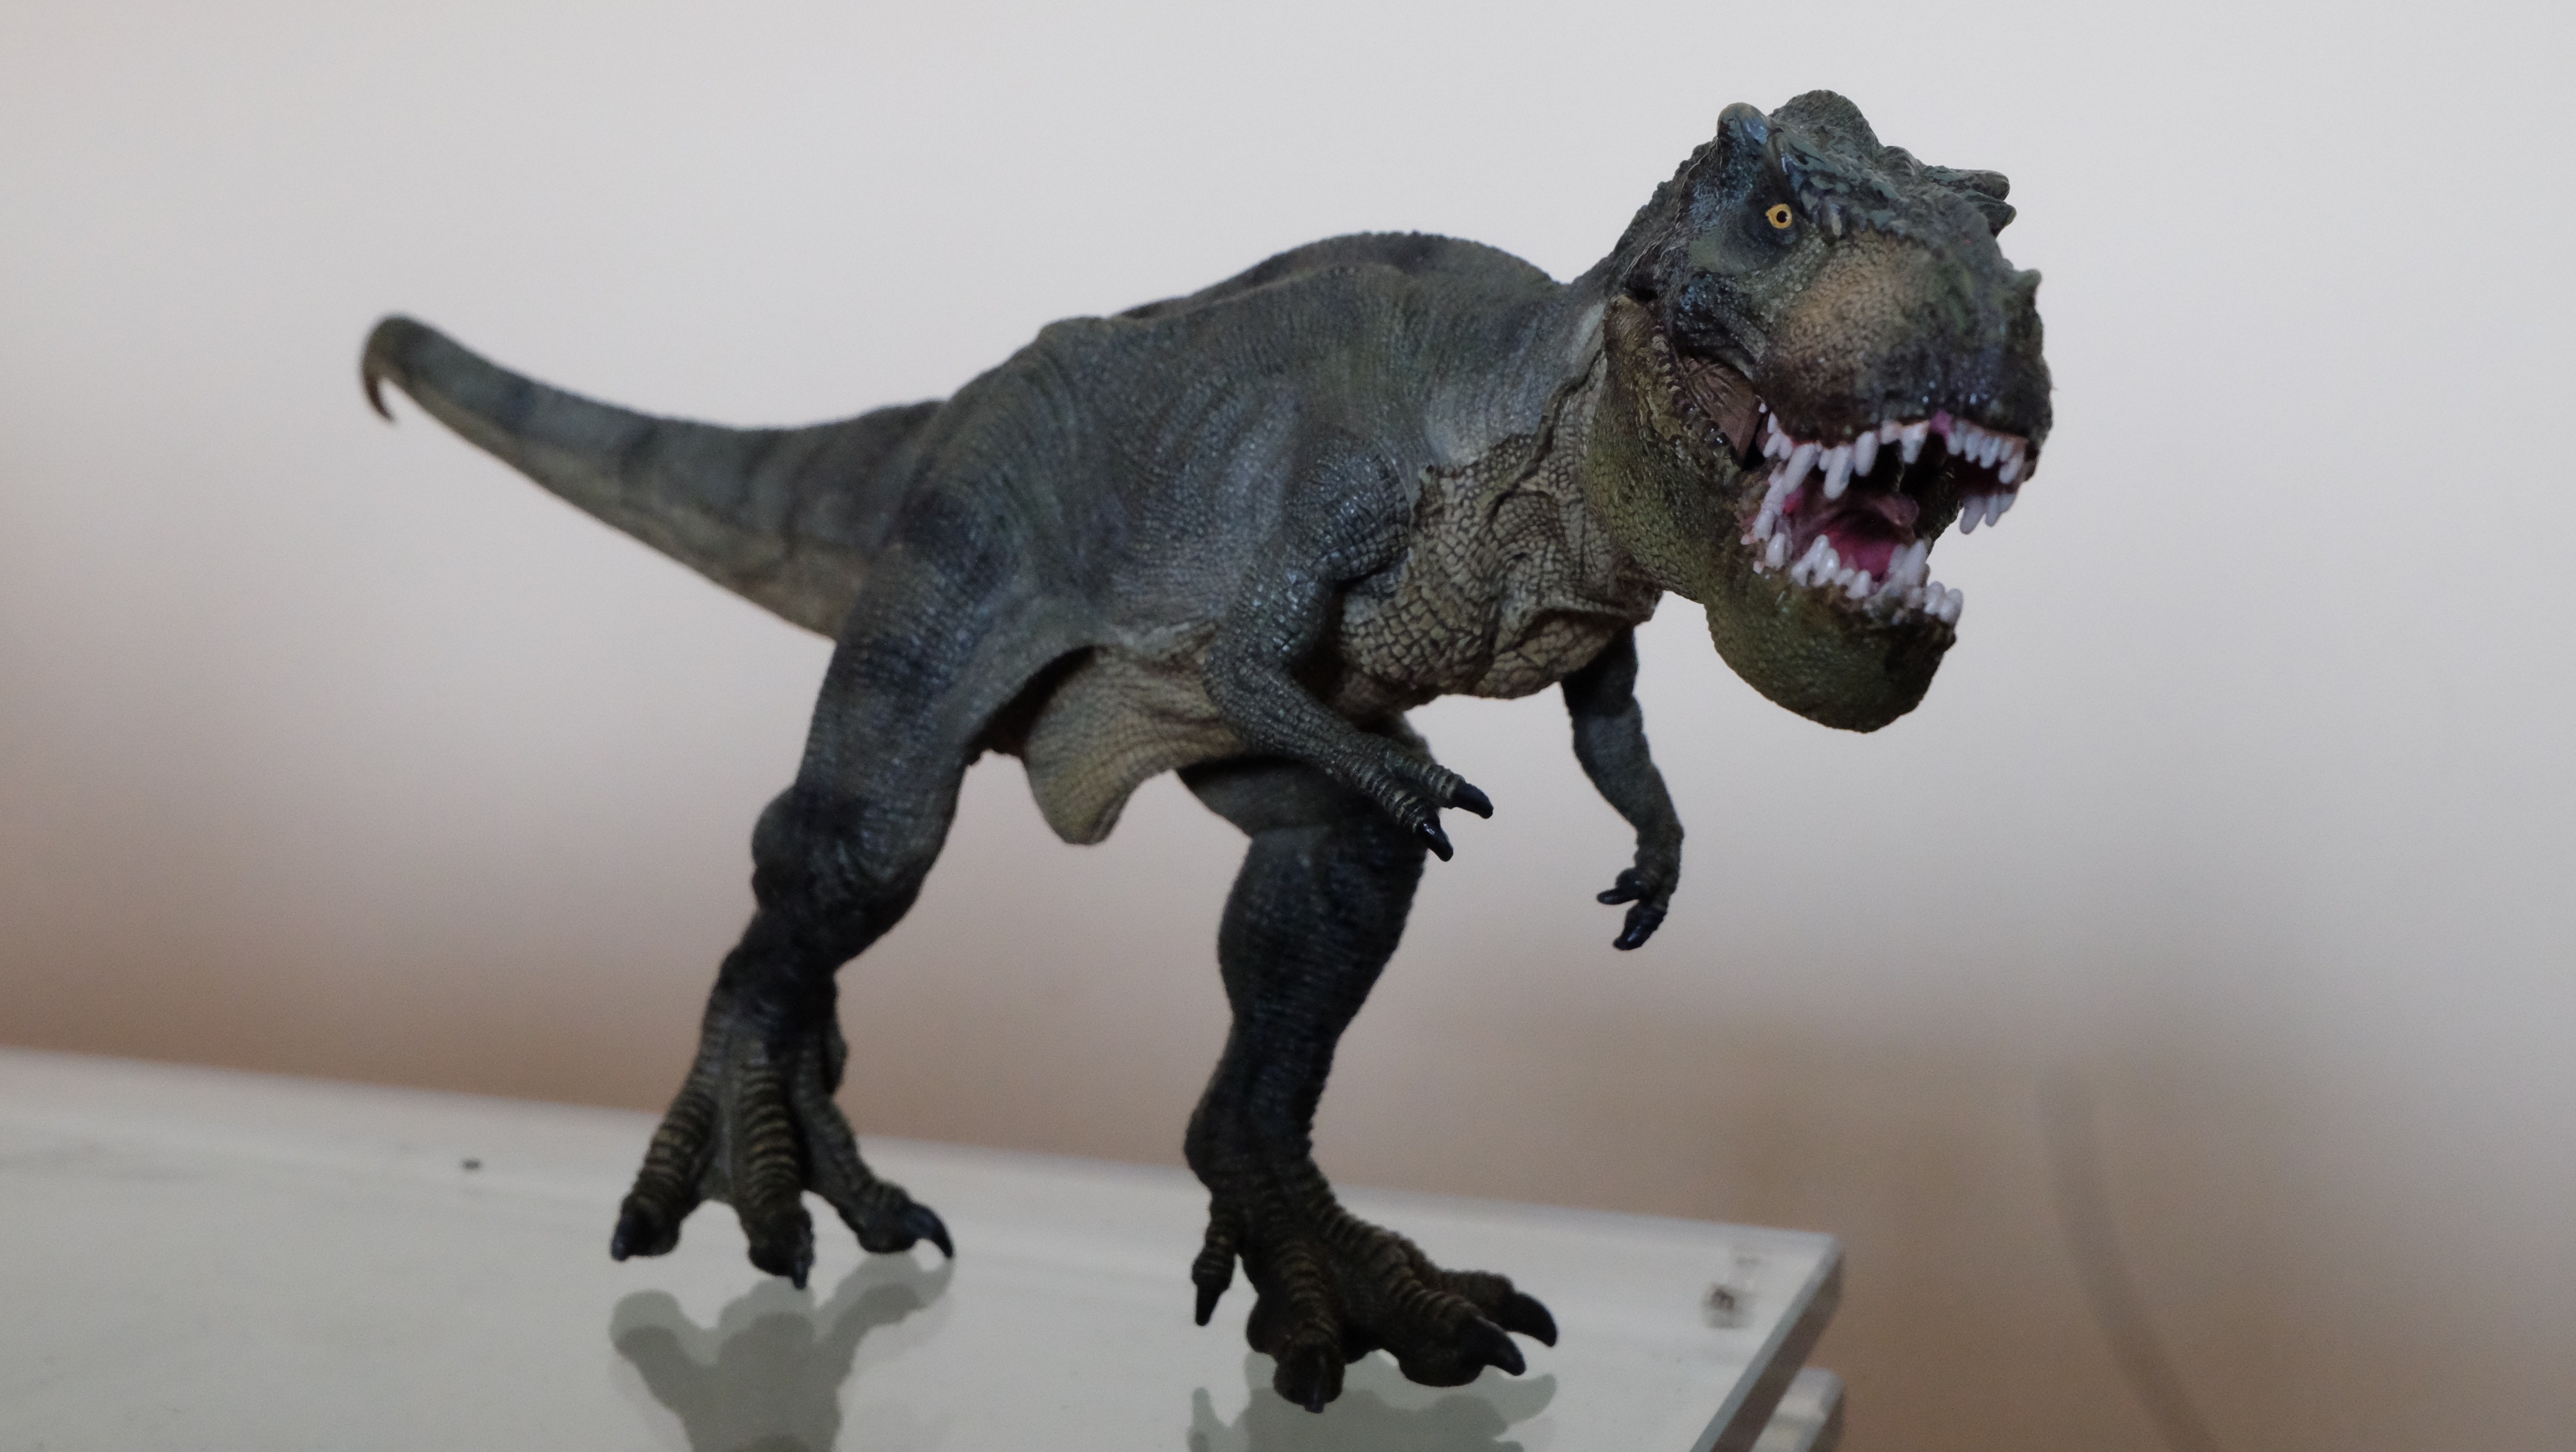 "black and gray T-Rex plastic figure" image online crop.